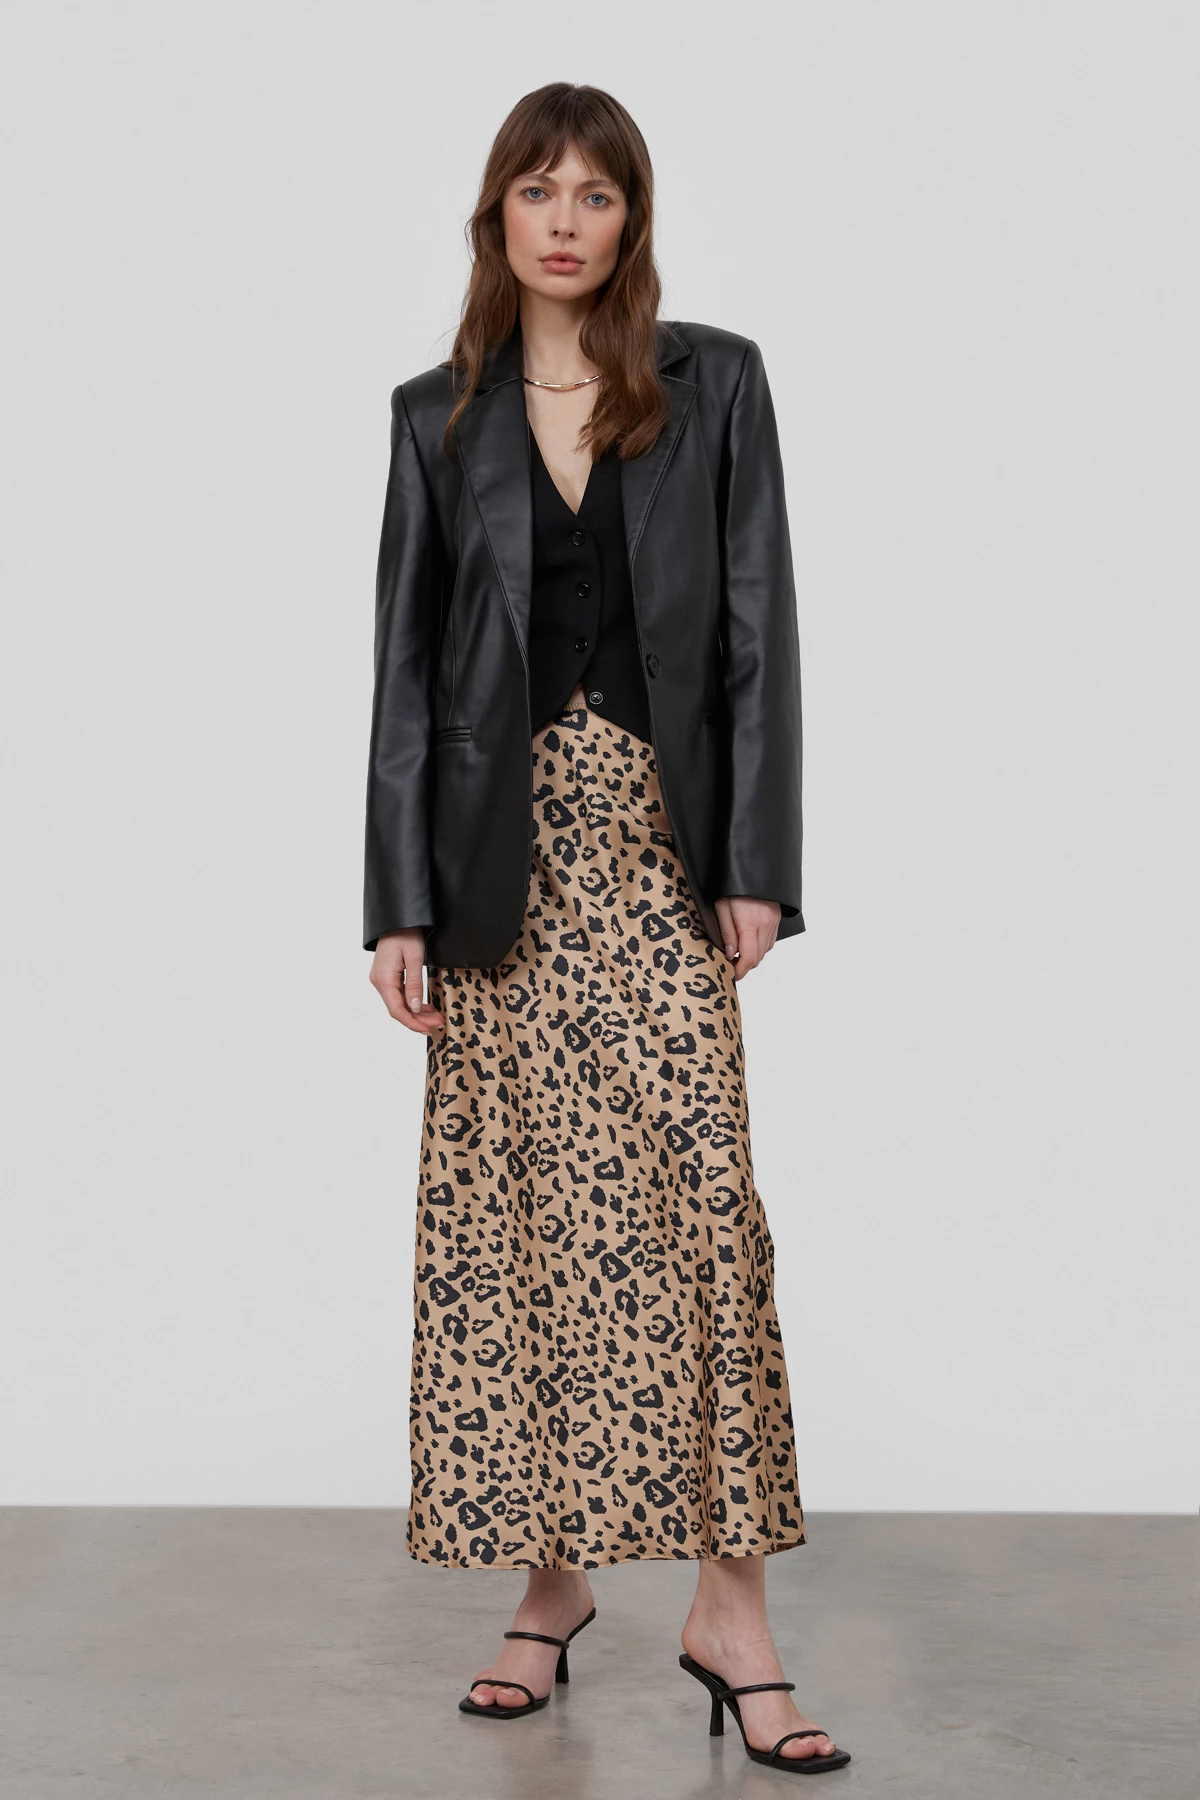 Mid-length satin skirt in leopard print, photo 5